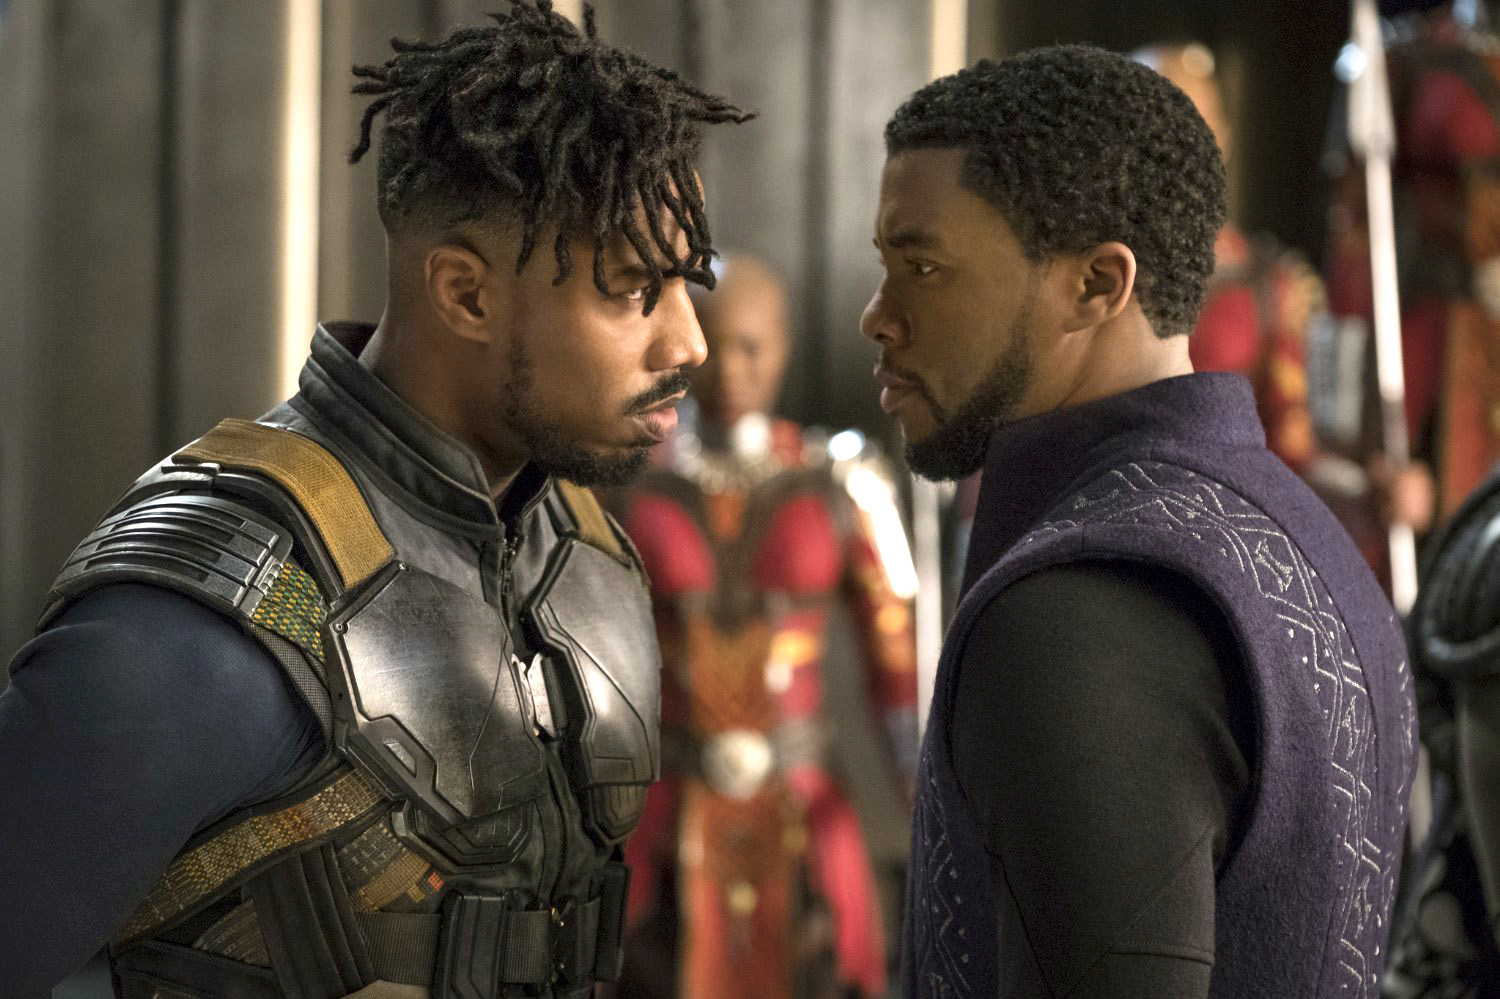 PHOTO: Michael B. Jordan and Chadwick Boseman in "Black Panther," 2018.